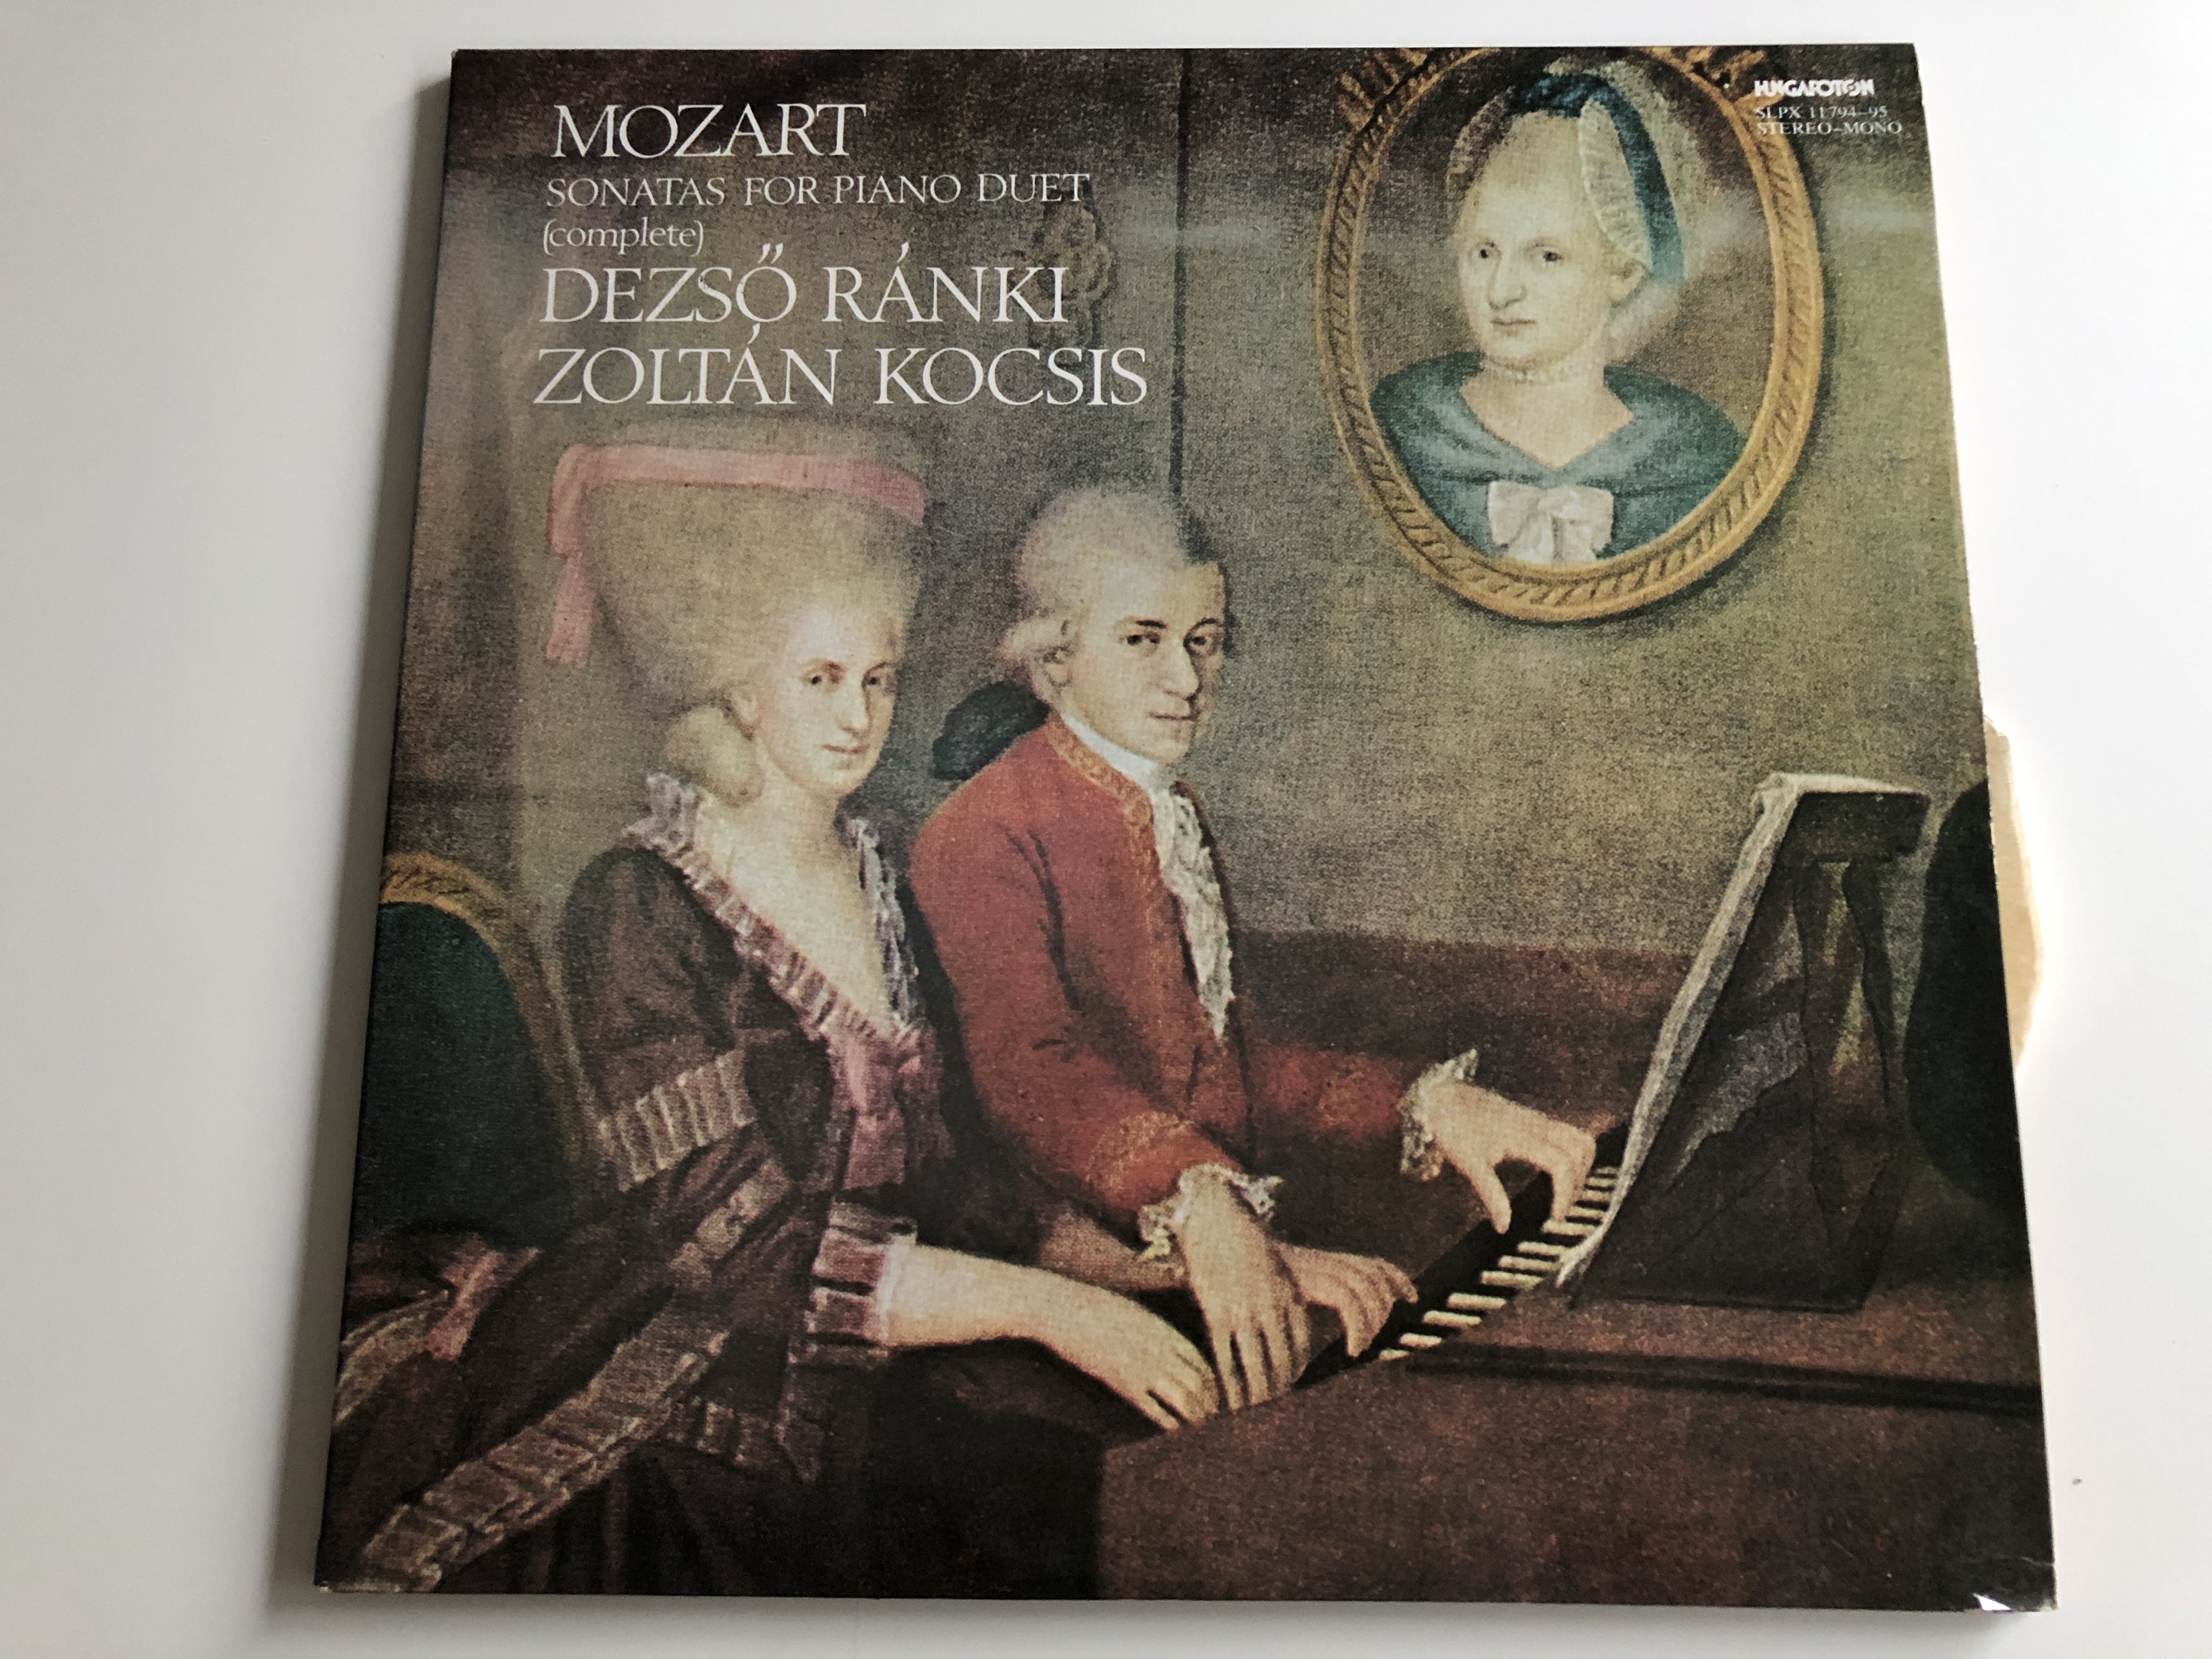 mozart-sonatas-for-piano-duet-complete-dezs-r-nki-zolt-n-kocsis-hungaroton-2x-lp-stereo-mono-slpx-11794-95-1-.jpg